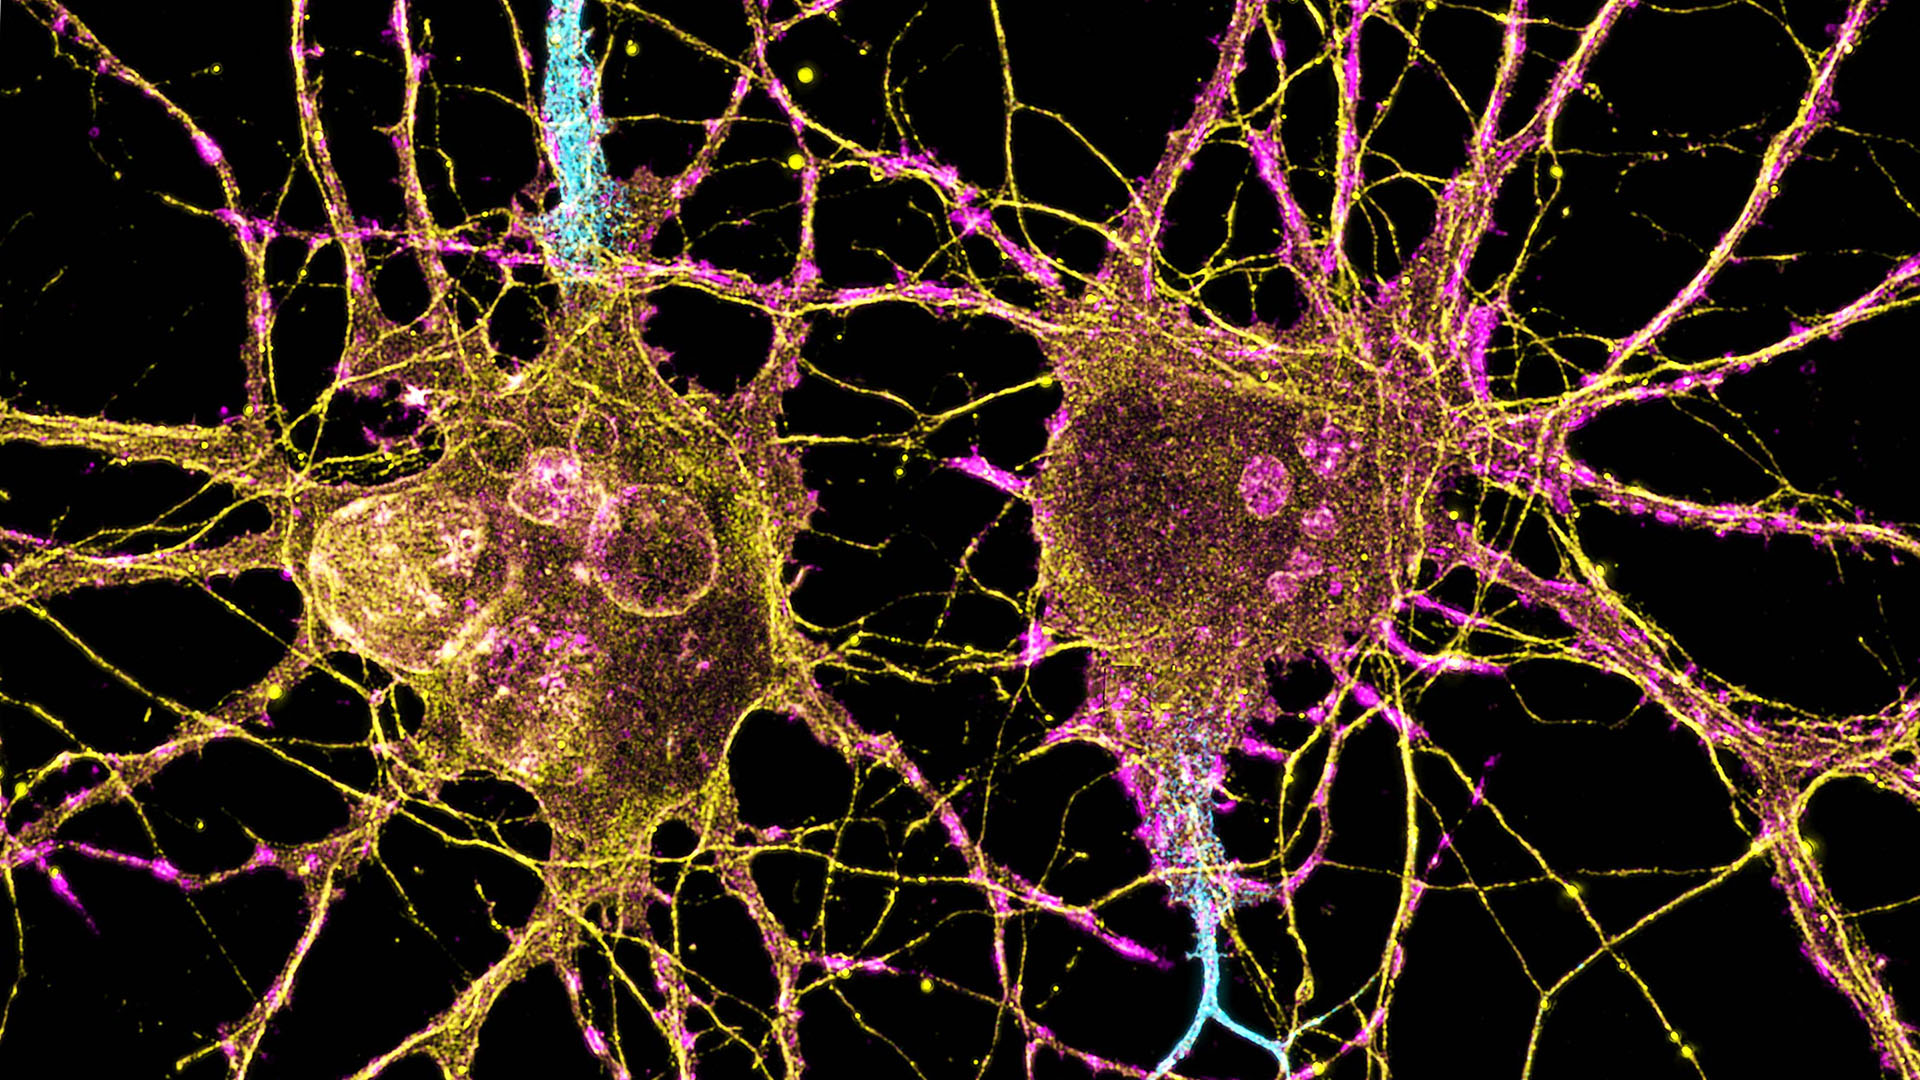 Human Brain Cell Atlas Offers Unprecedented Look at